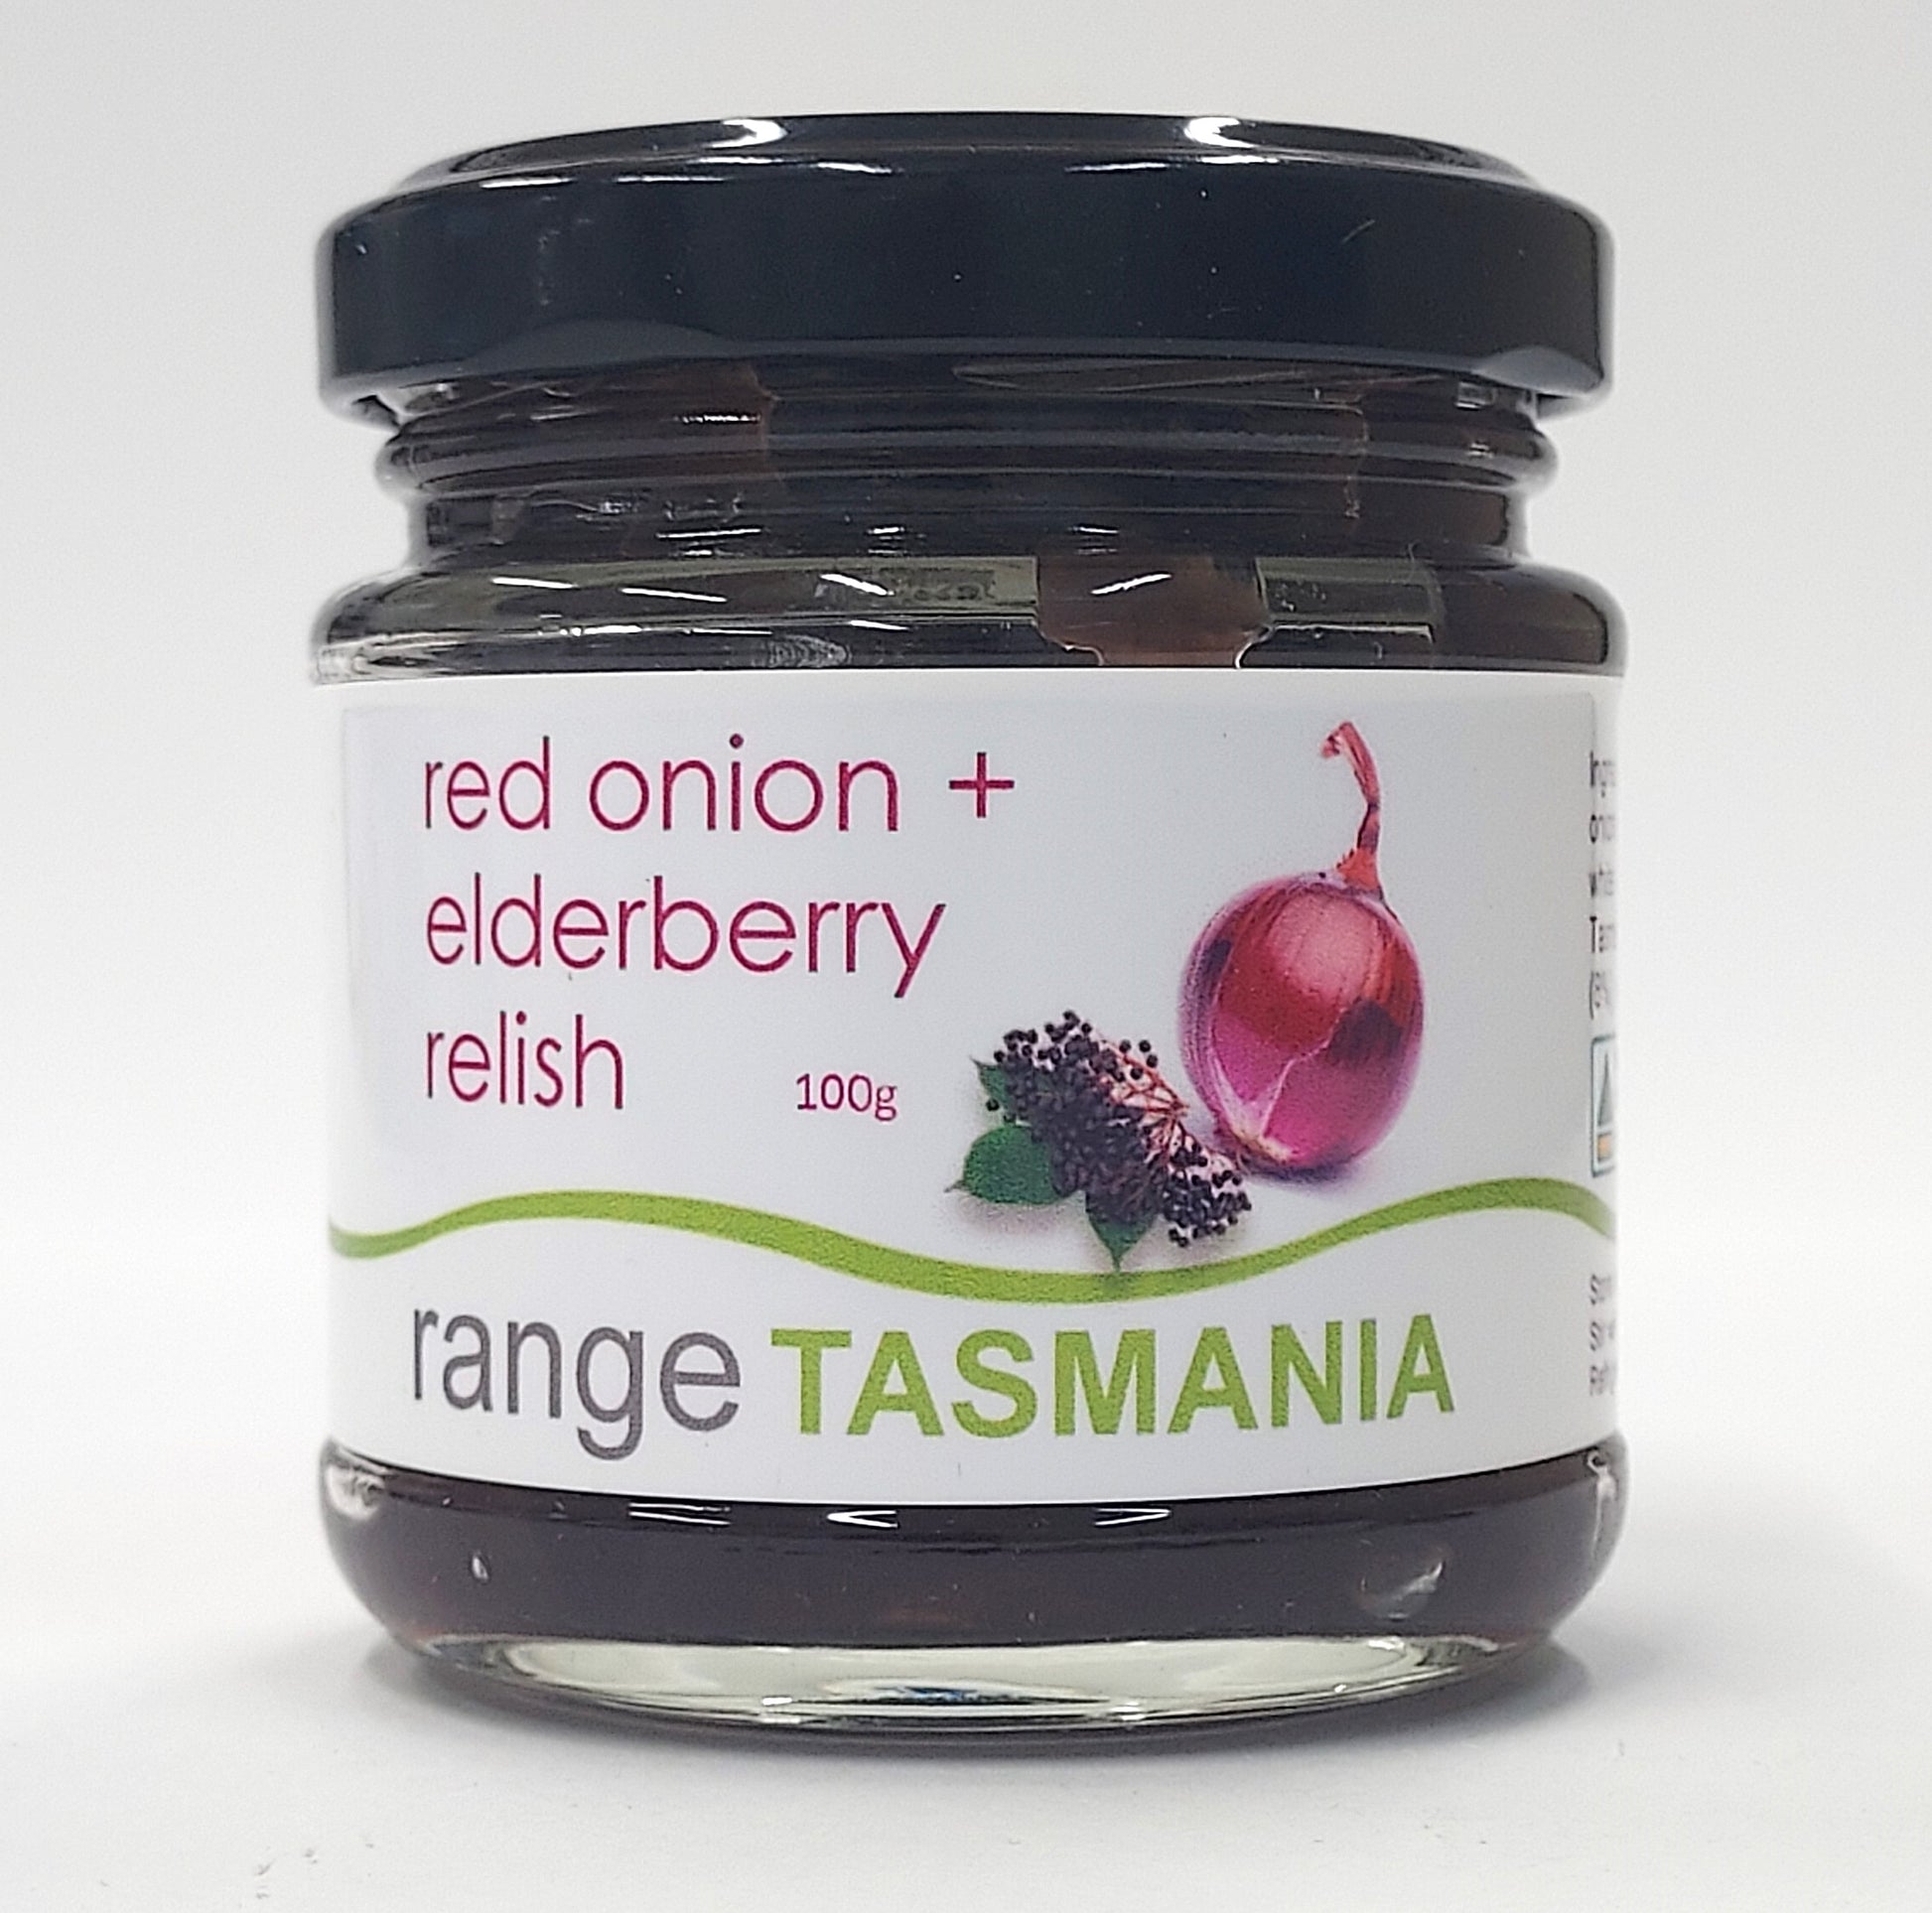 a 100 gram jar of range Tasmania red onion and elderberry relish